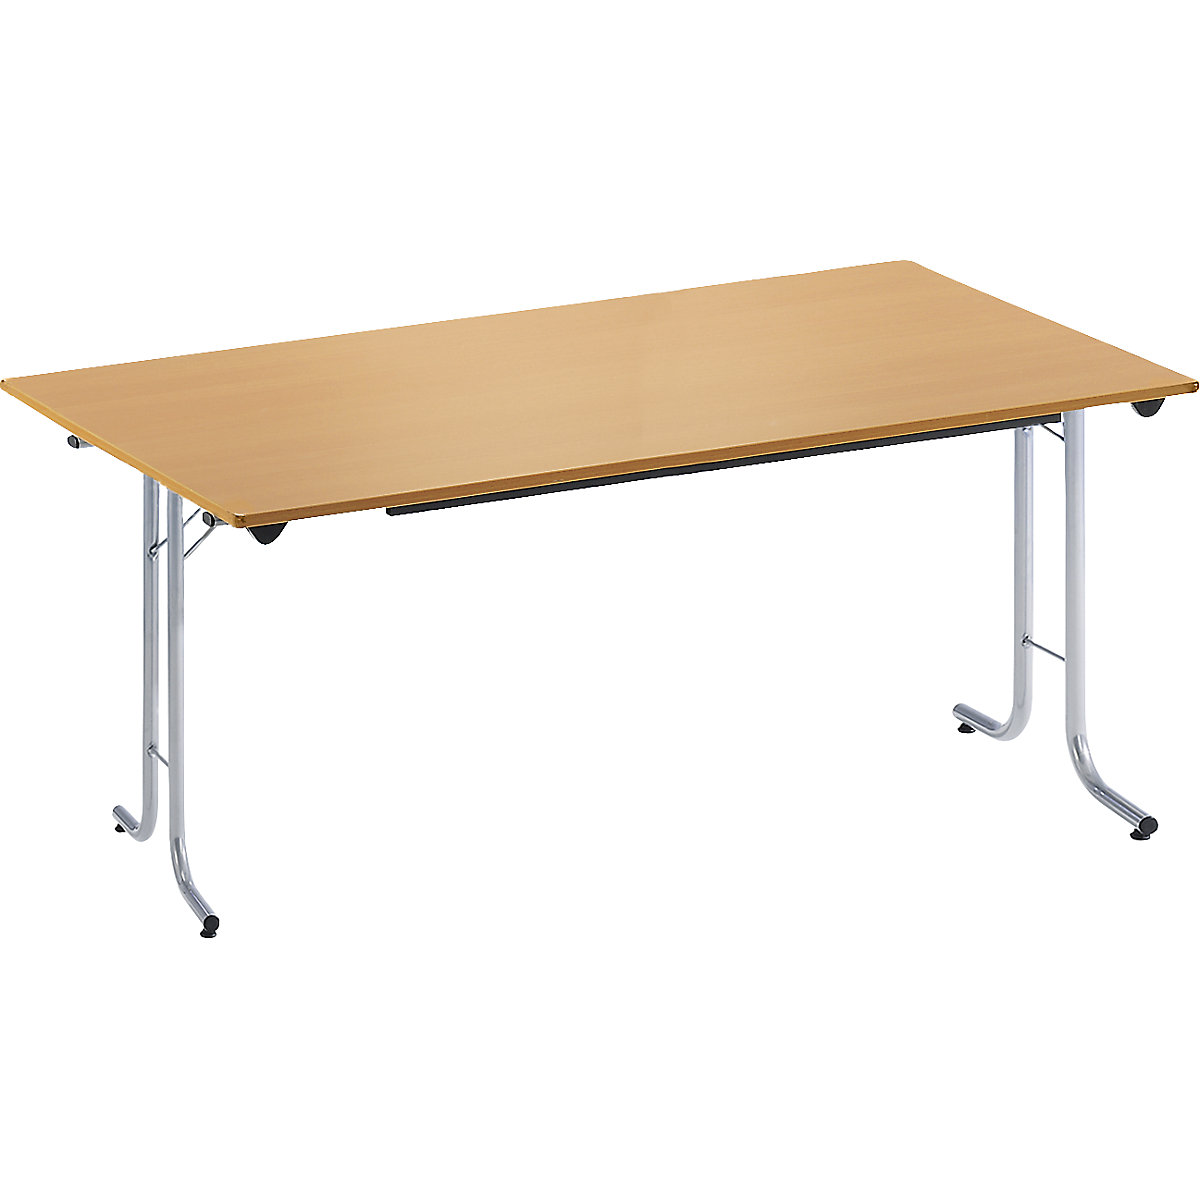 Folding table, with rounded edges, round tubular frame, rectangular top, 1400 x 700 mm, aluminium coloured frame, beech finish tabletop-14